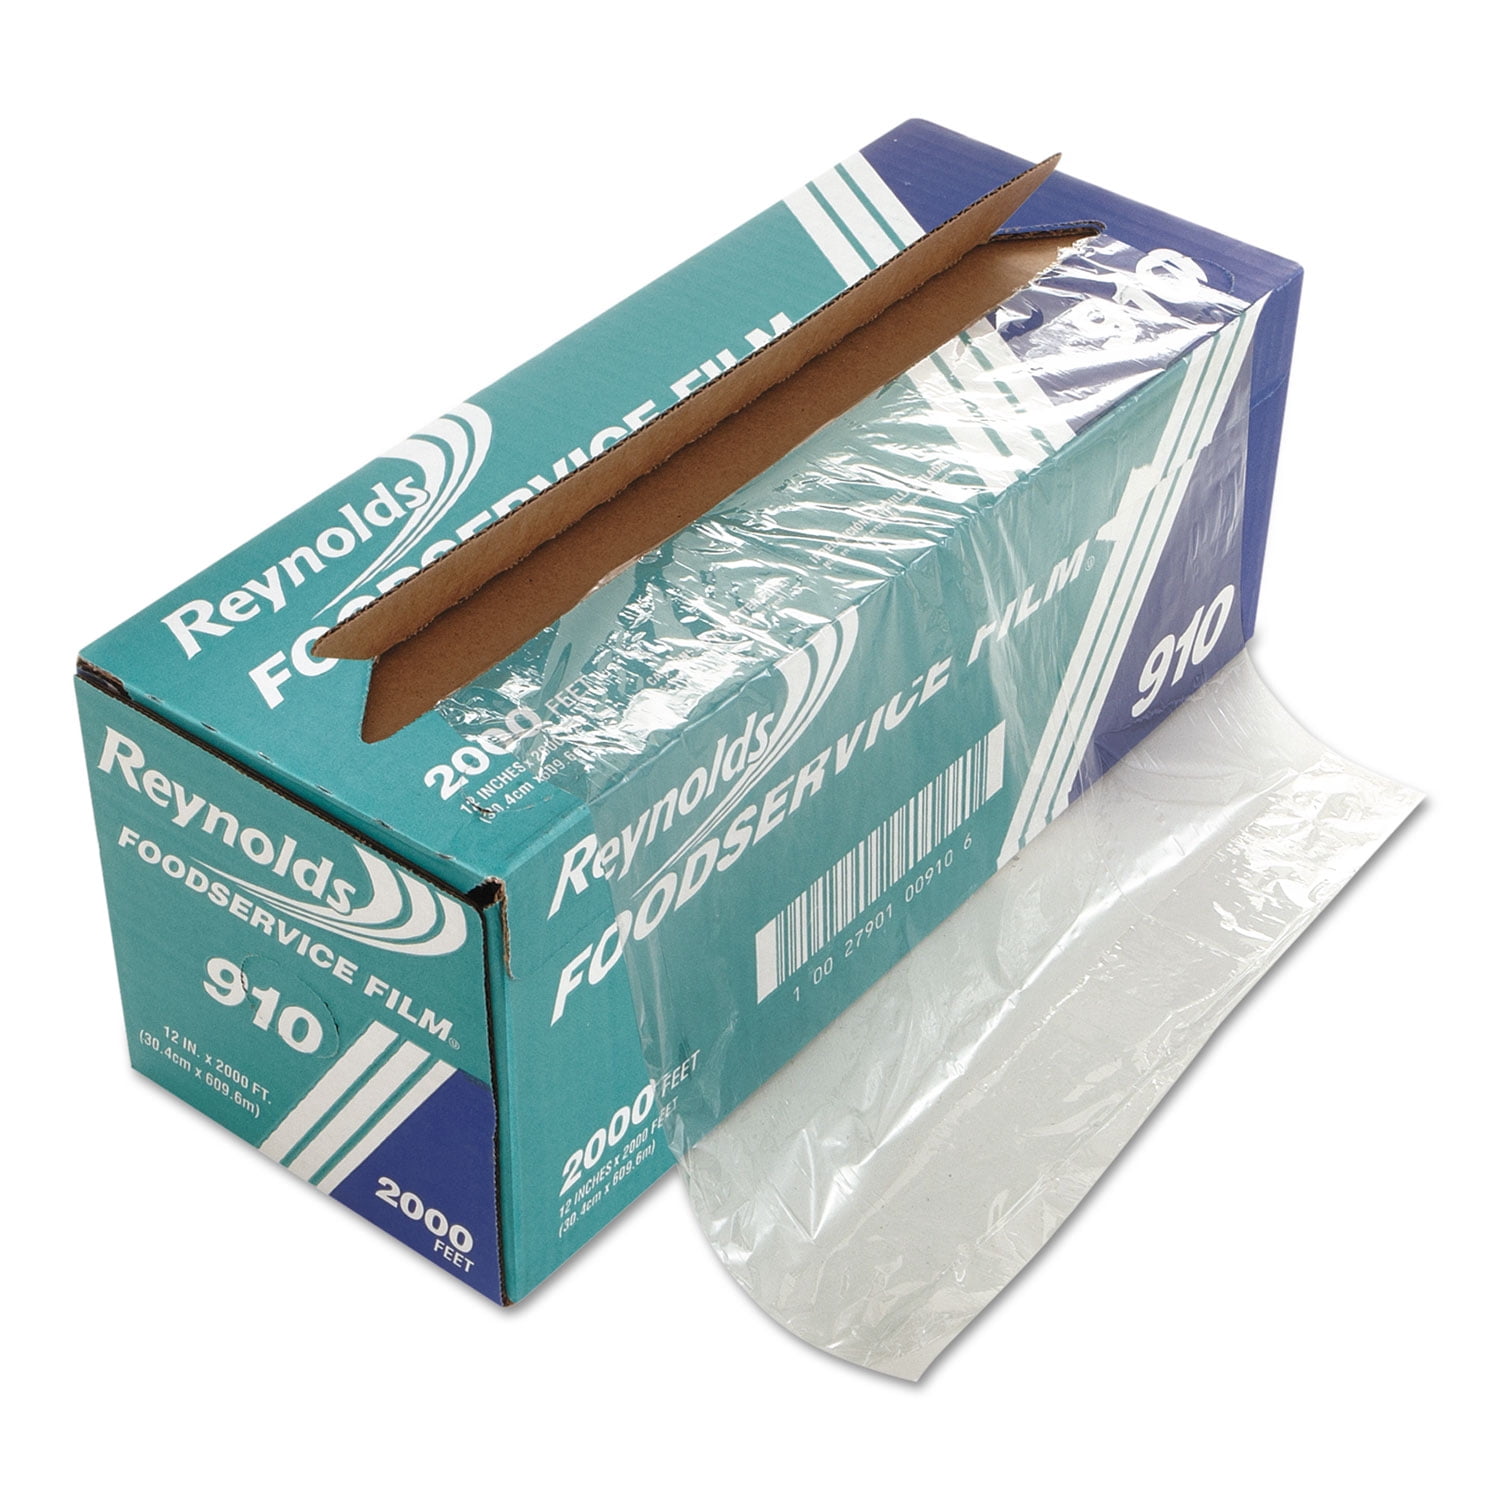 Polyvinyl Films® Cutter Box 18” x 2000' Professional Wrap